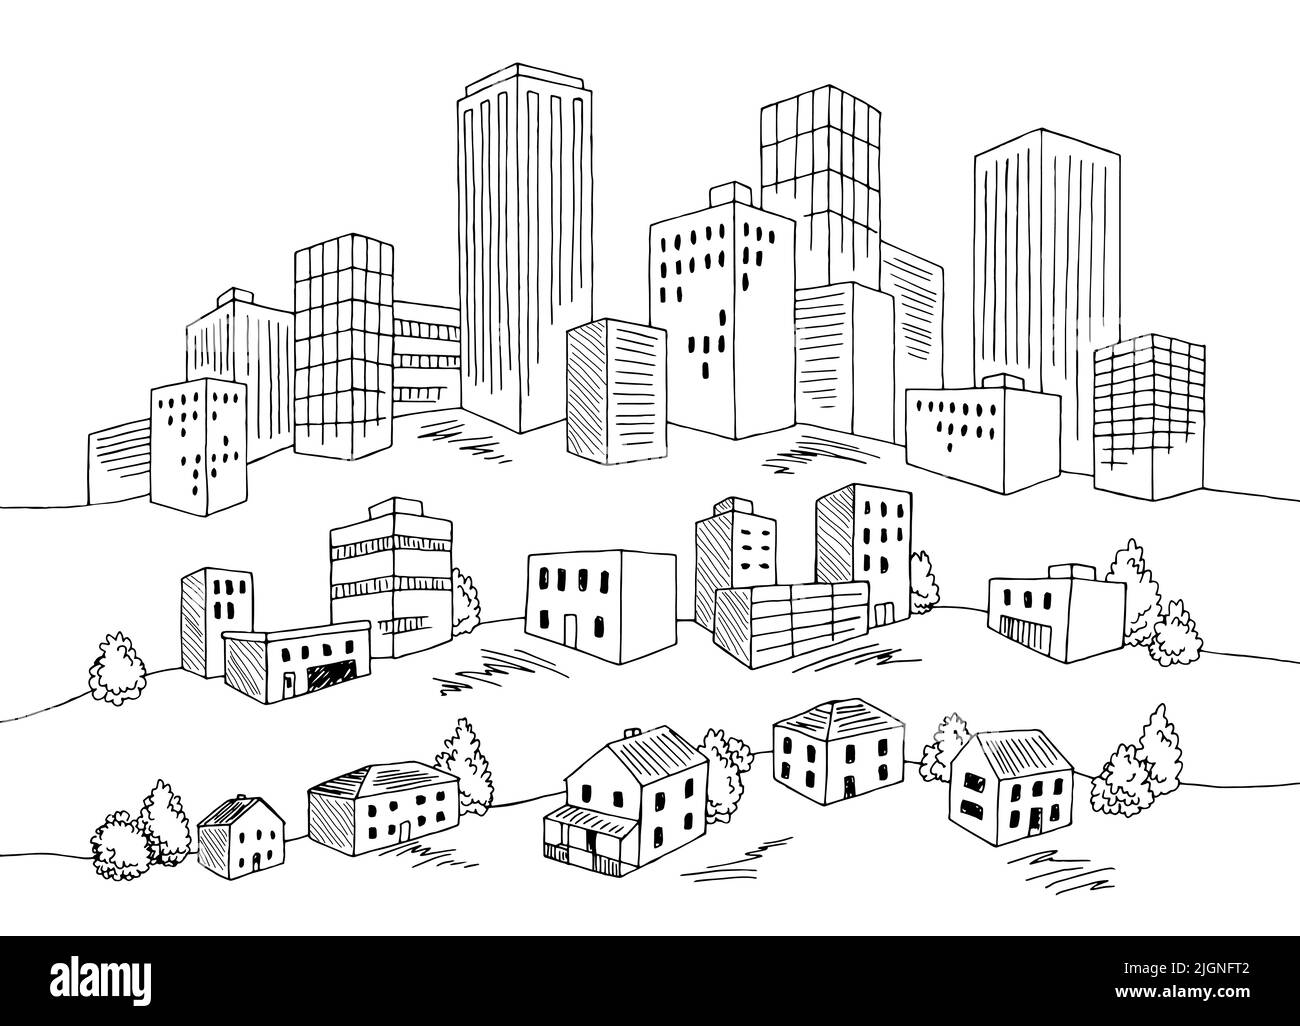 Stadt Grafik schwarz weiß Stadtbild Hügel Skizze Illustration Vektor Stock Vektor